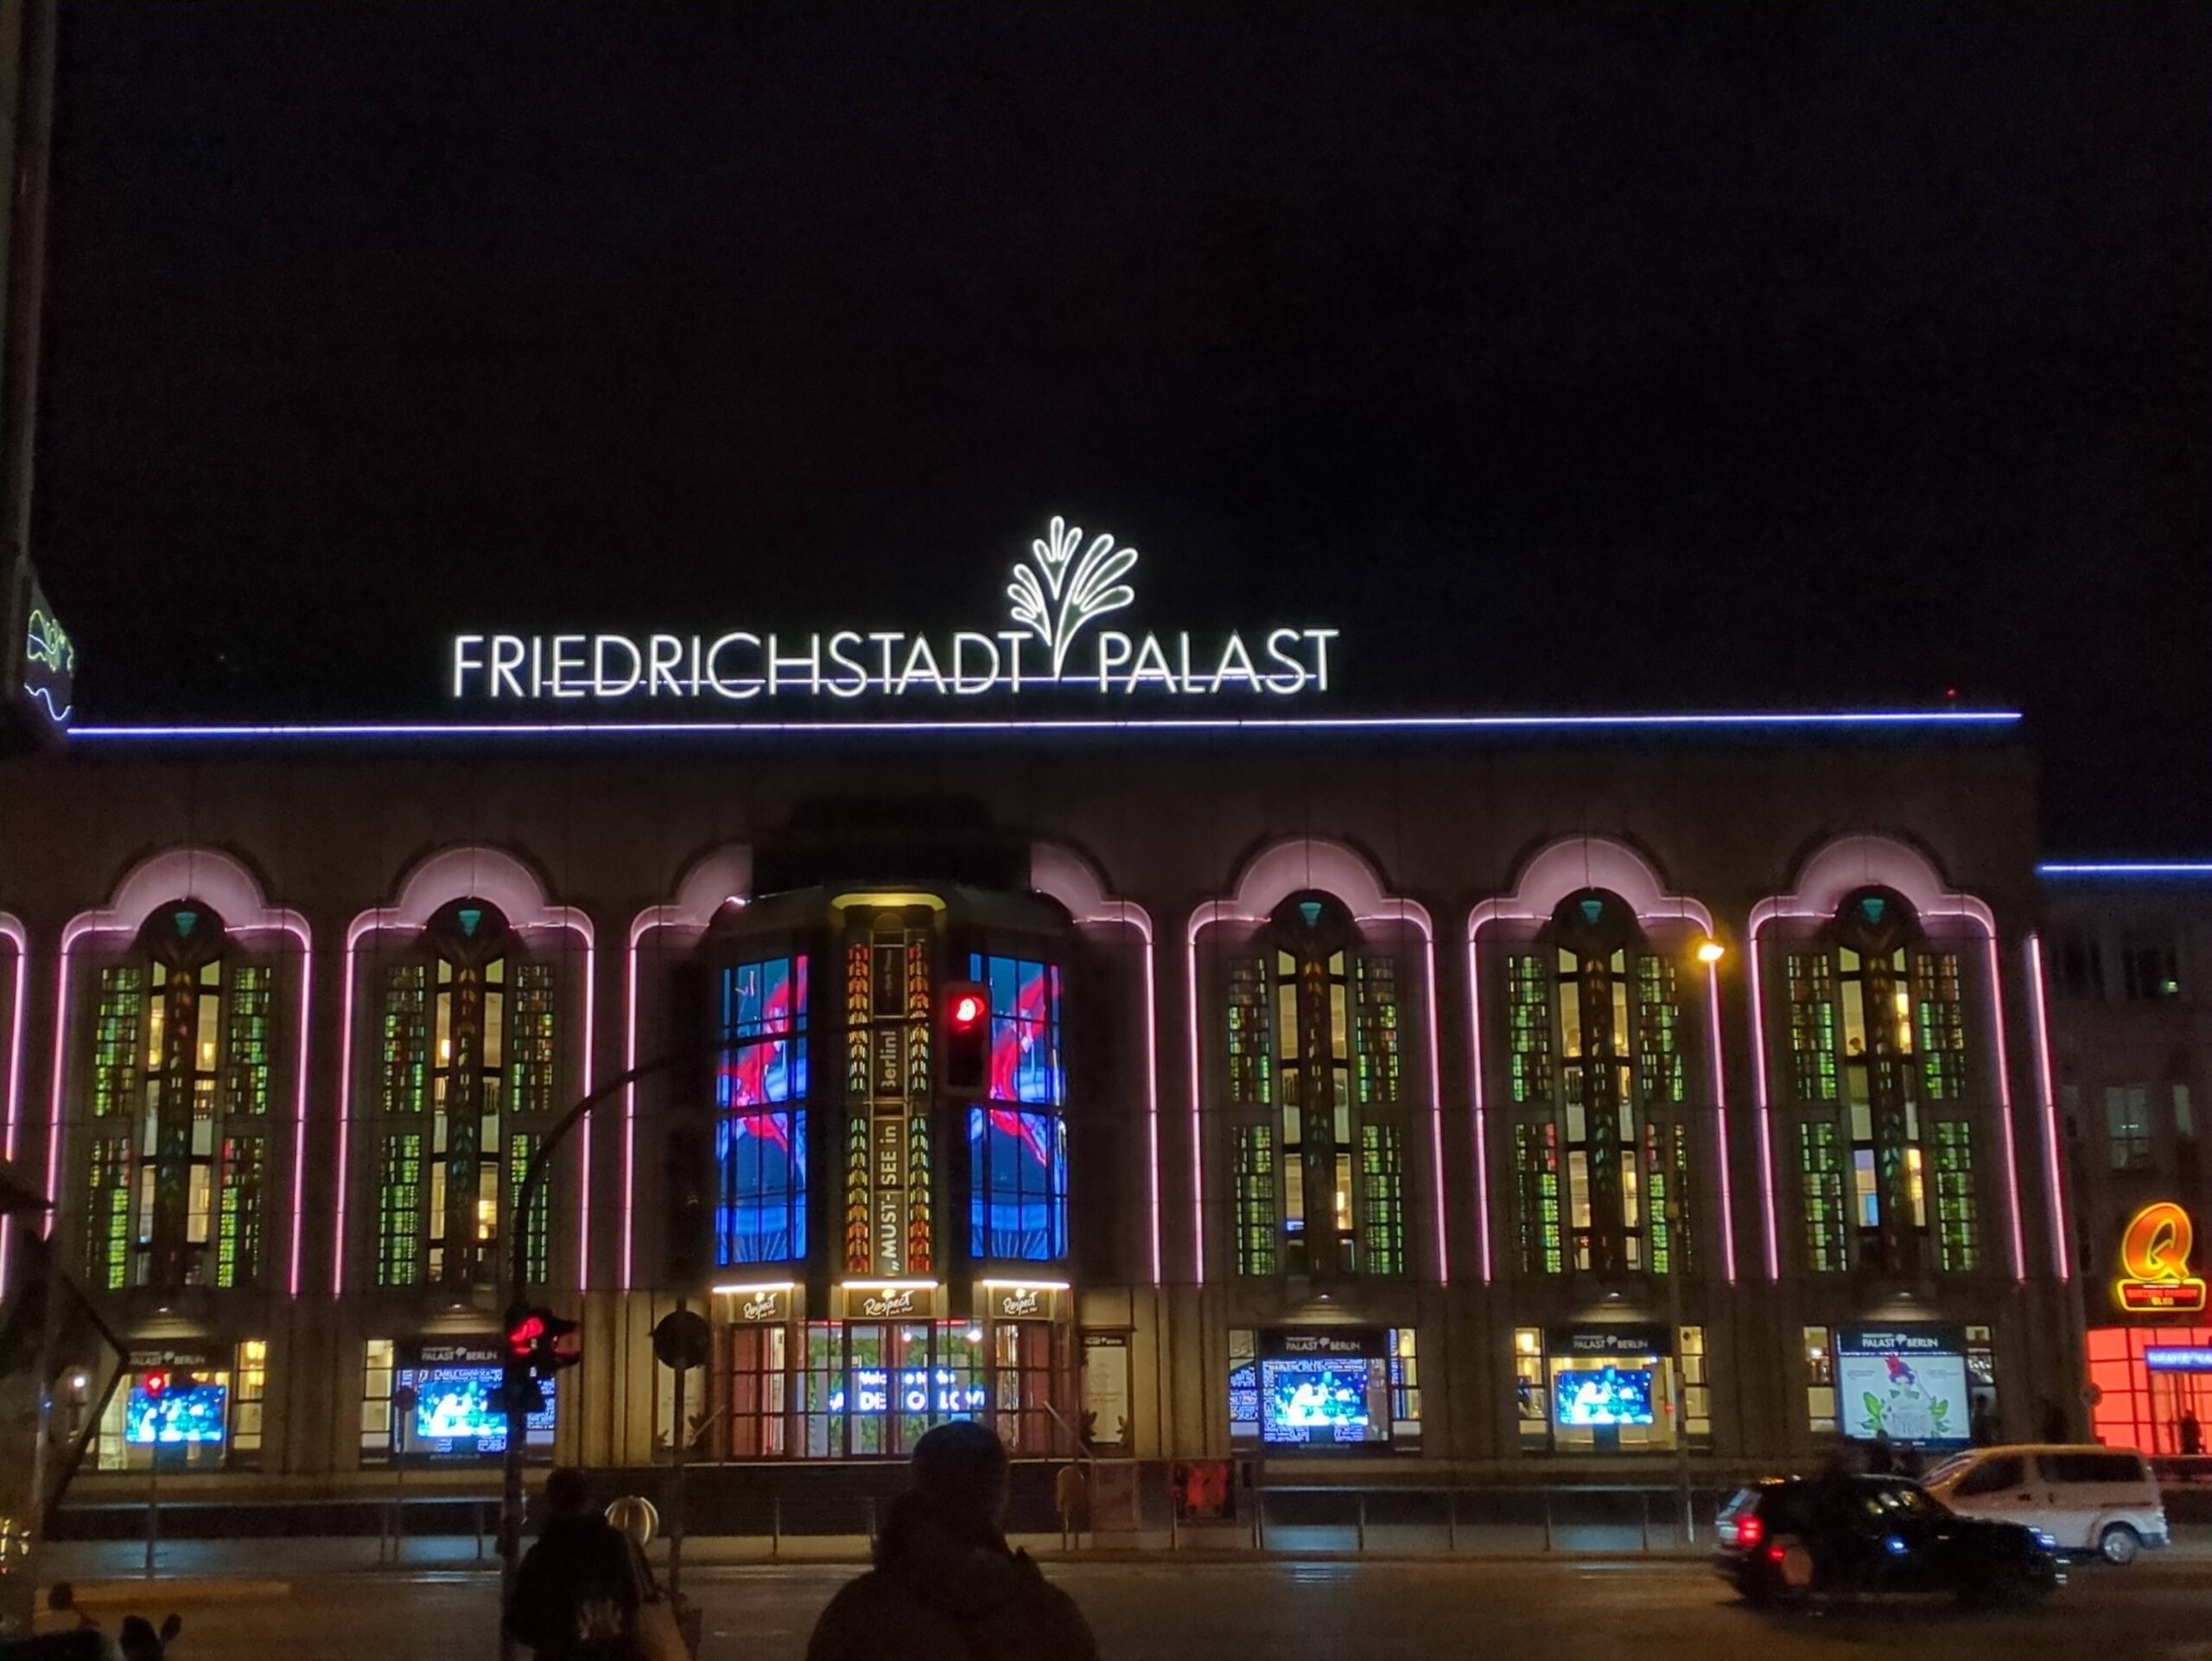 Friedrichstadtpalast bei Nacht in voller beleuchteter Glorie.